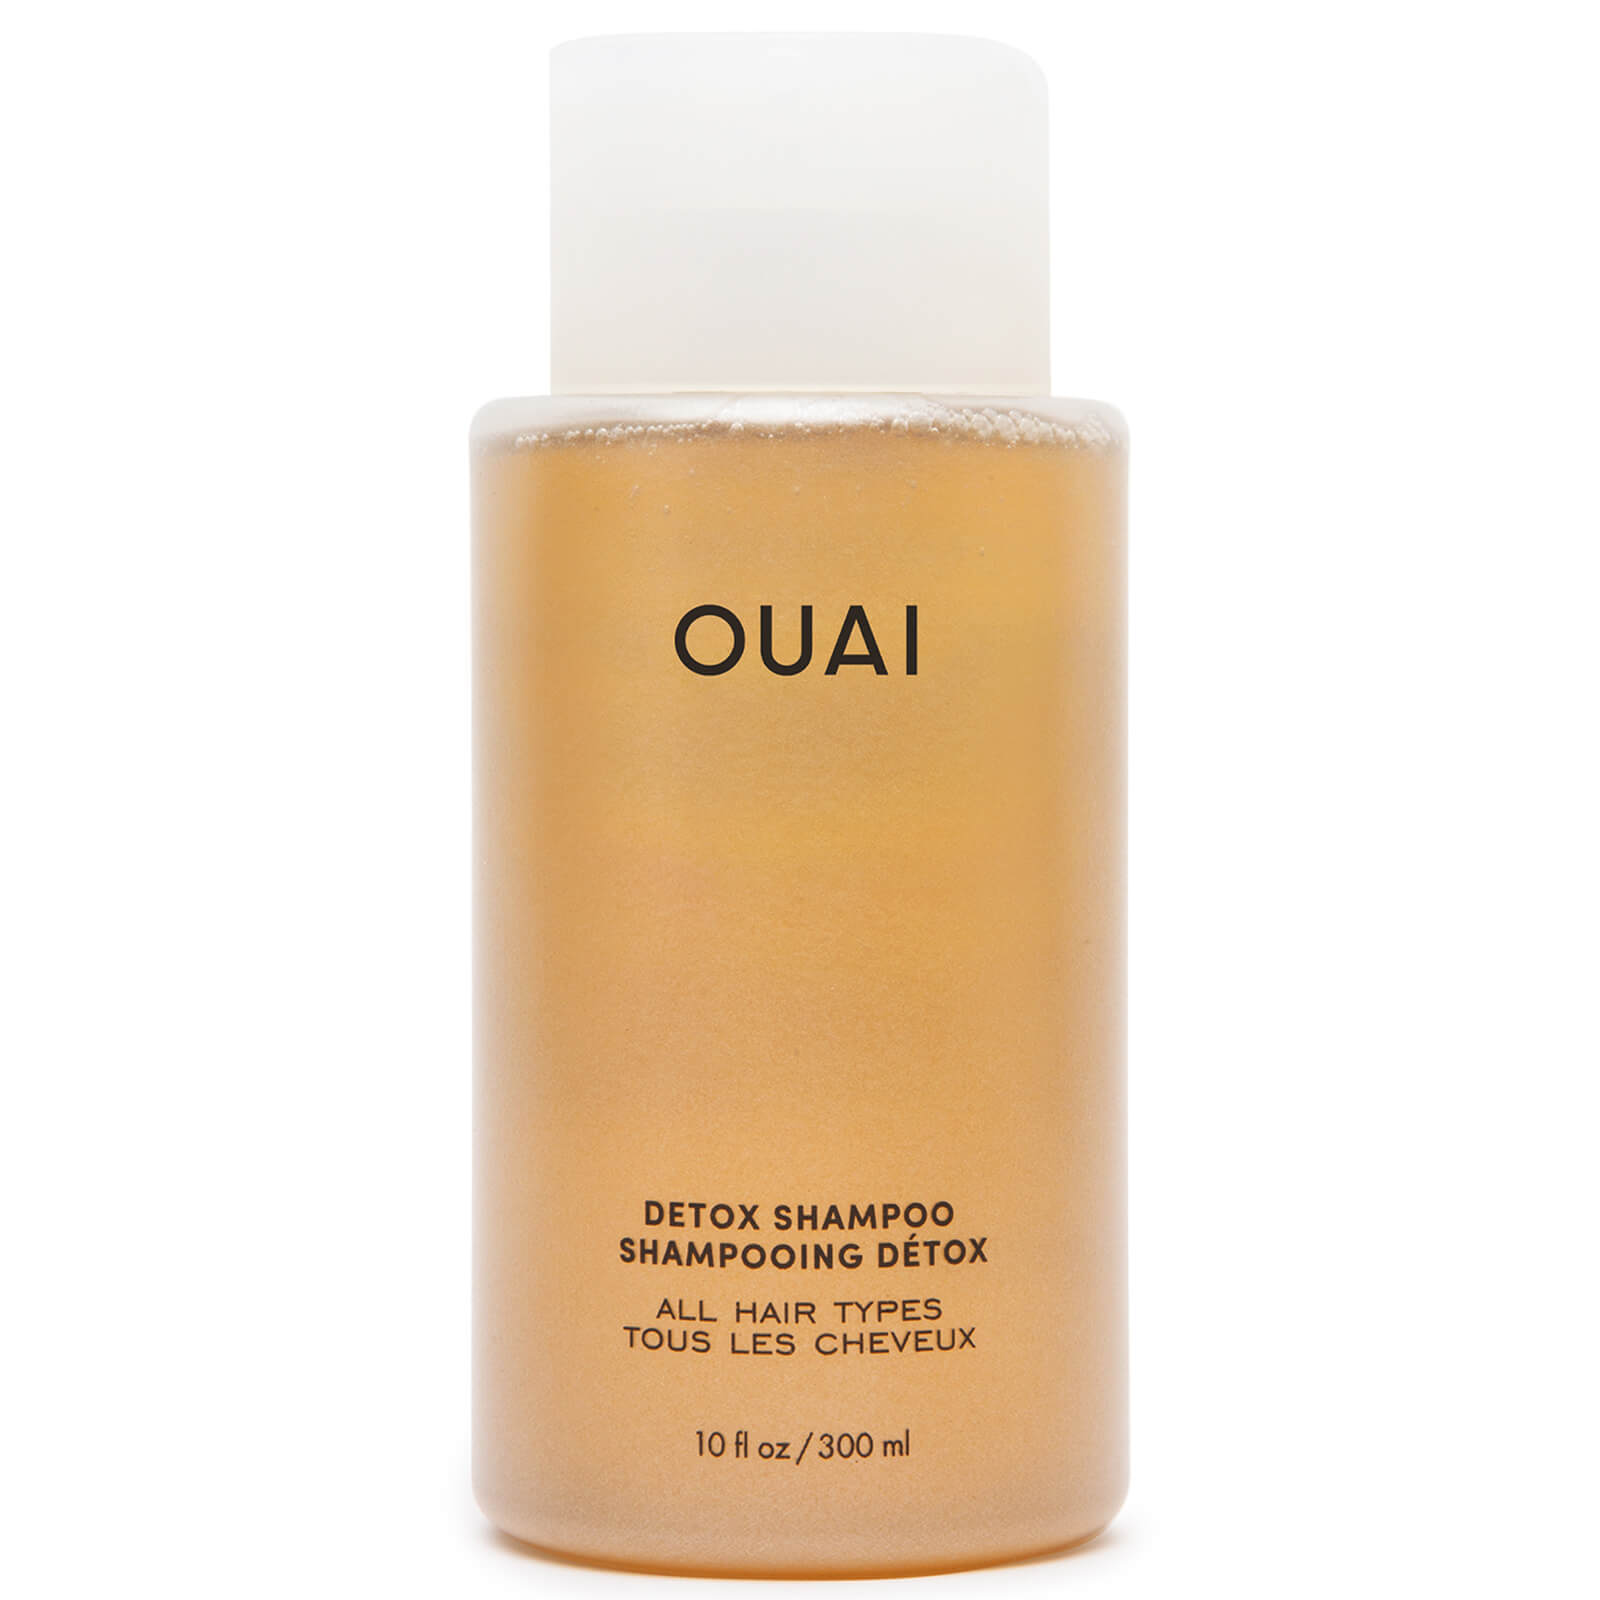 OUAI Detox Shampoo 300ml product